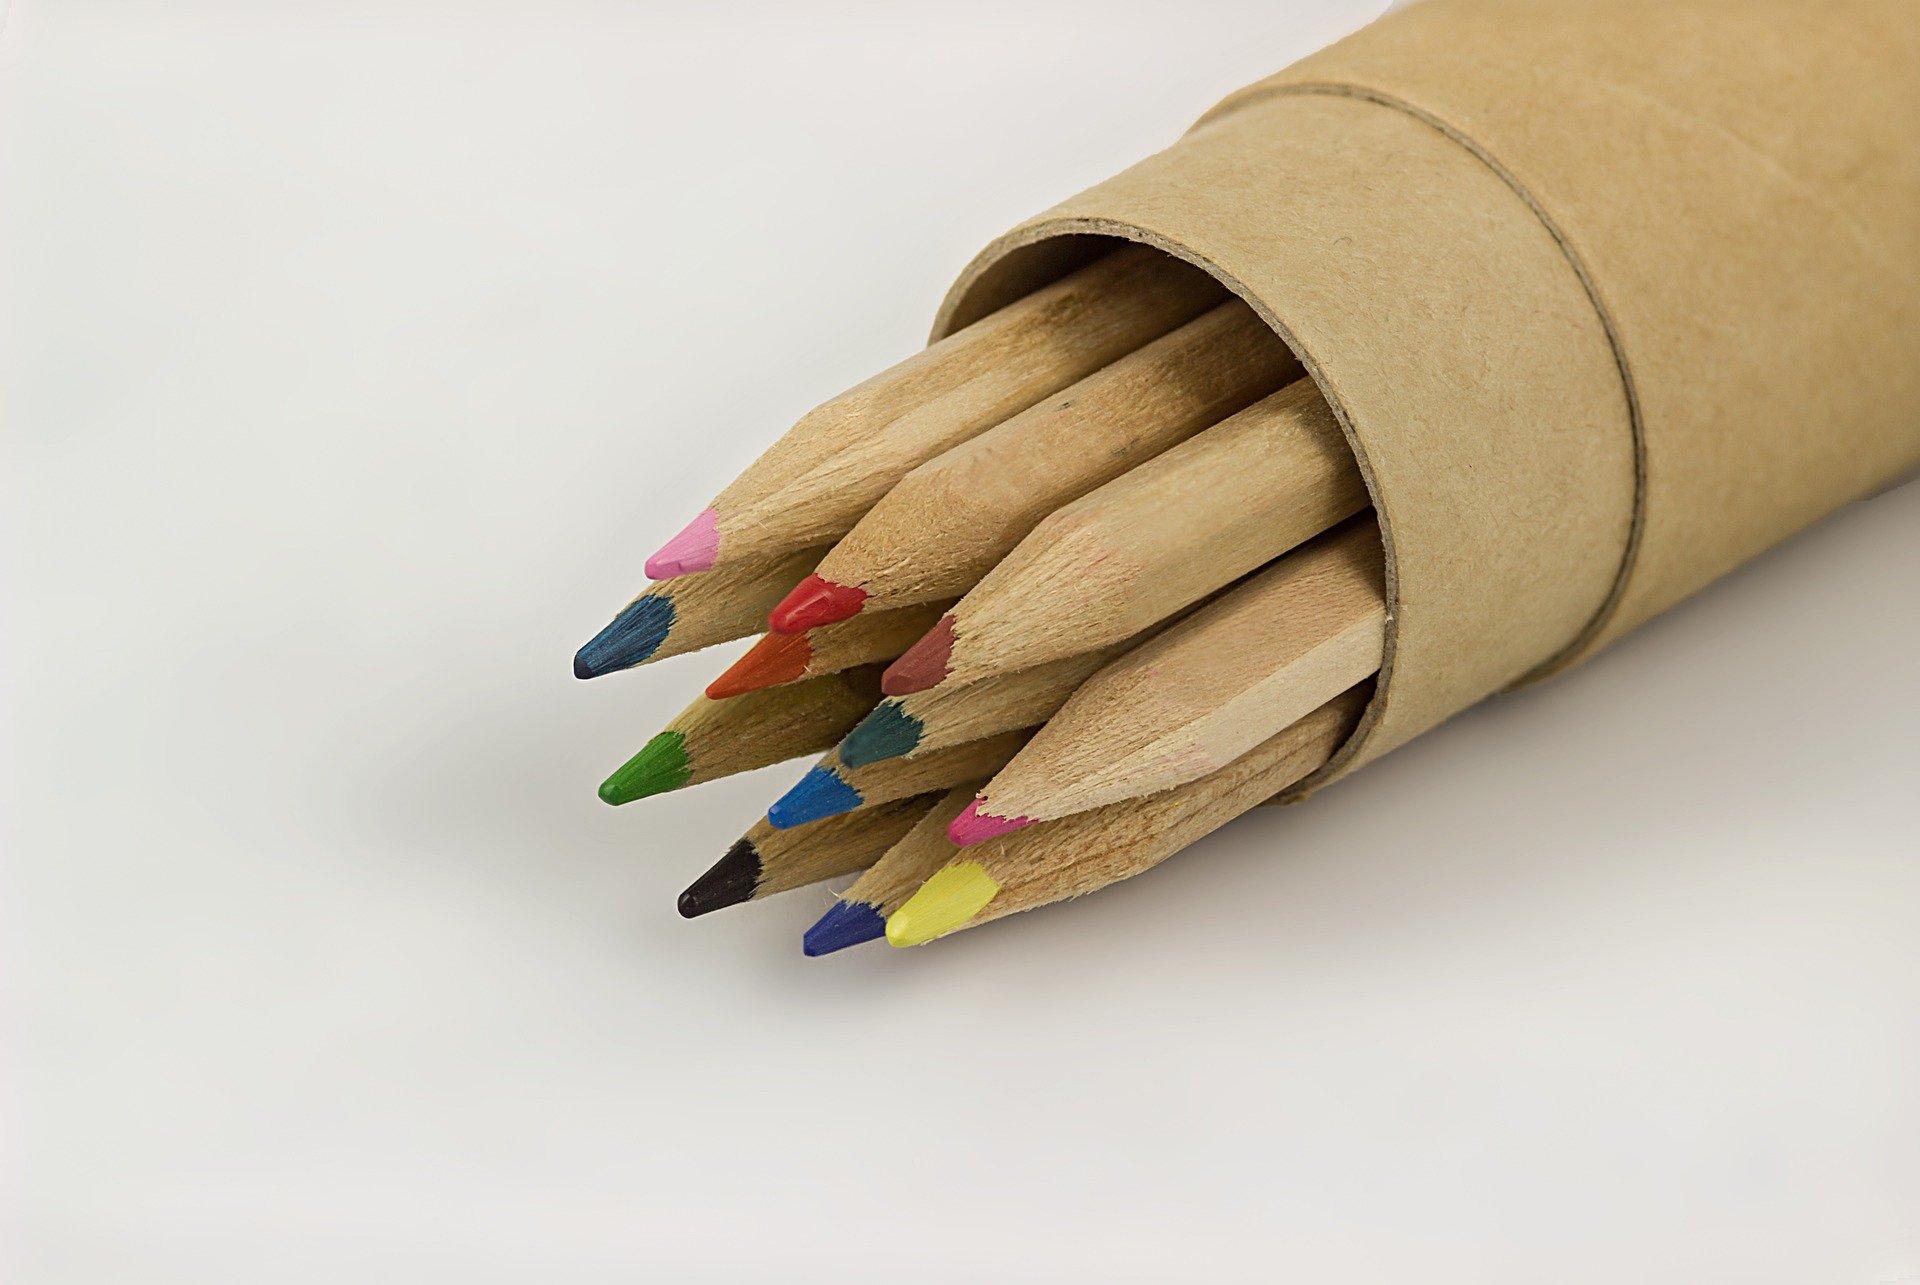 Estuche de lápices. | Foto: Pixabay